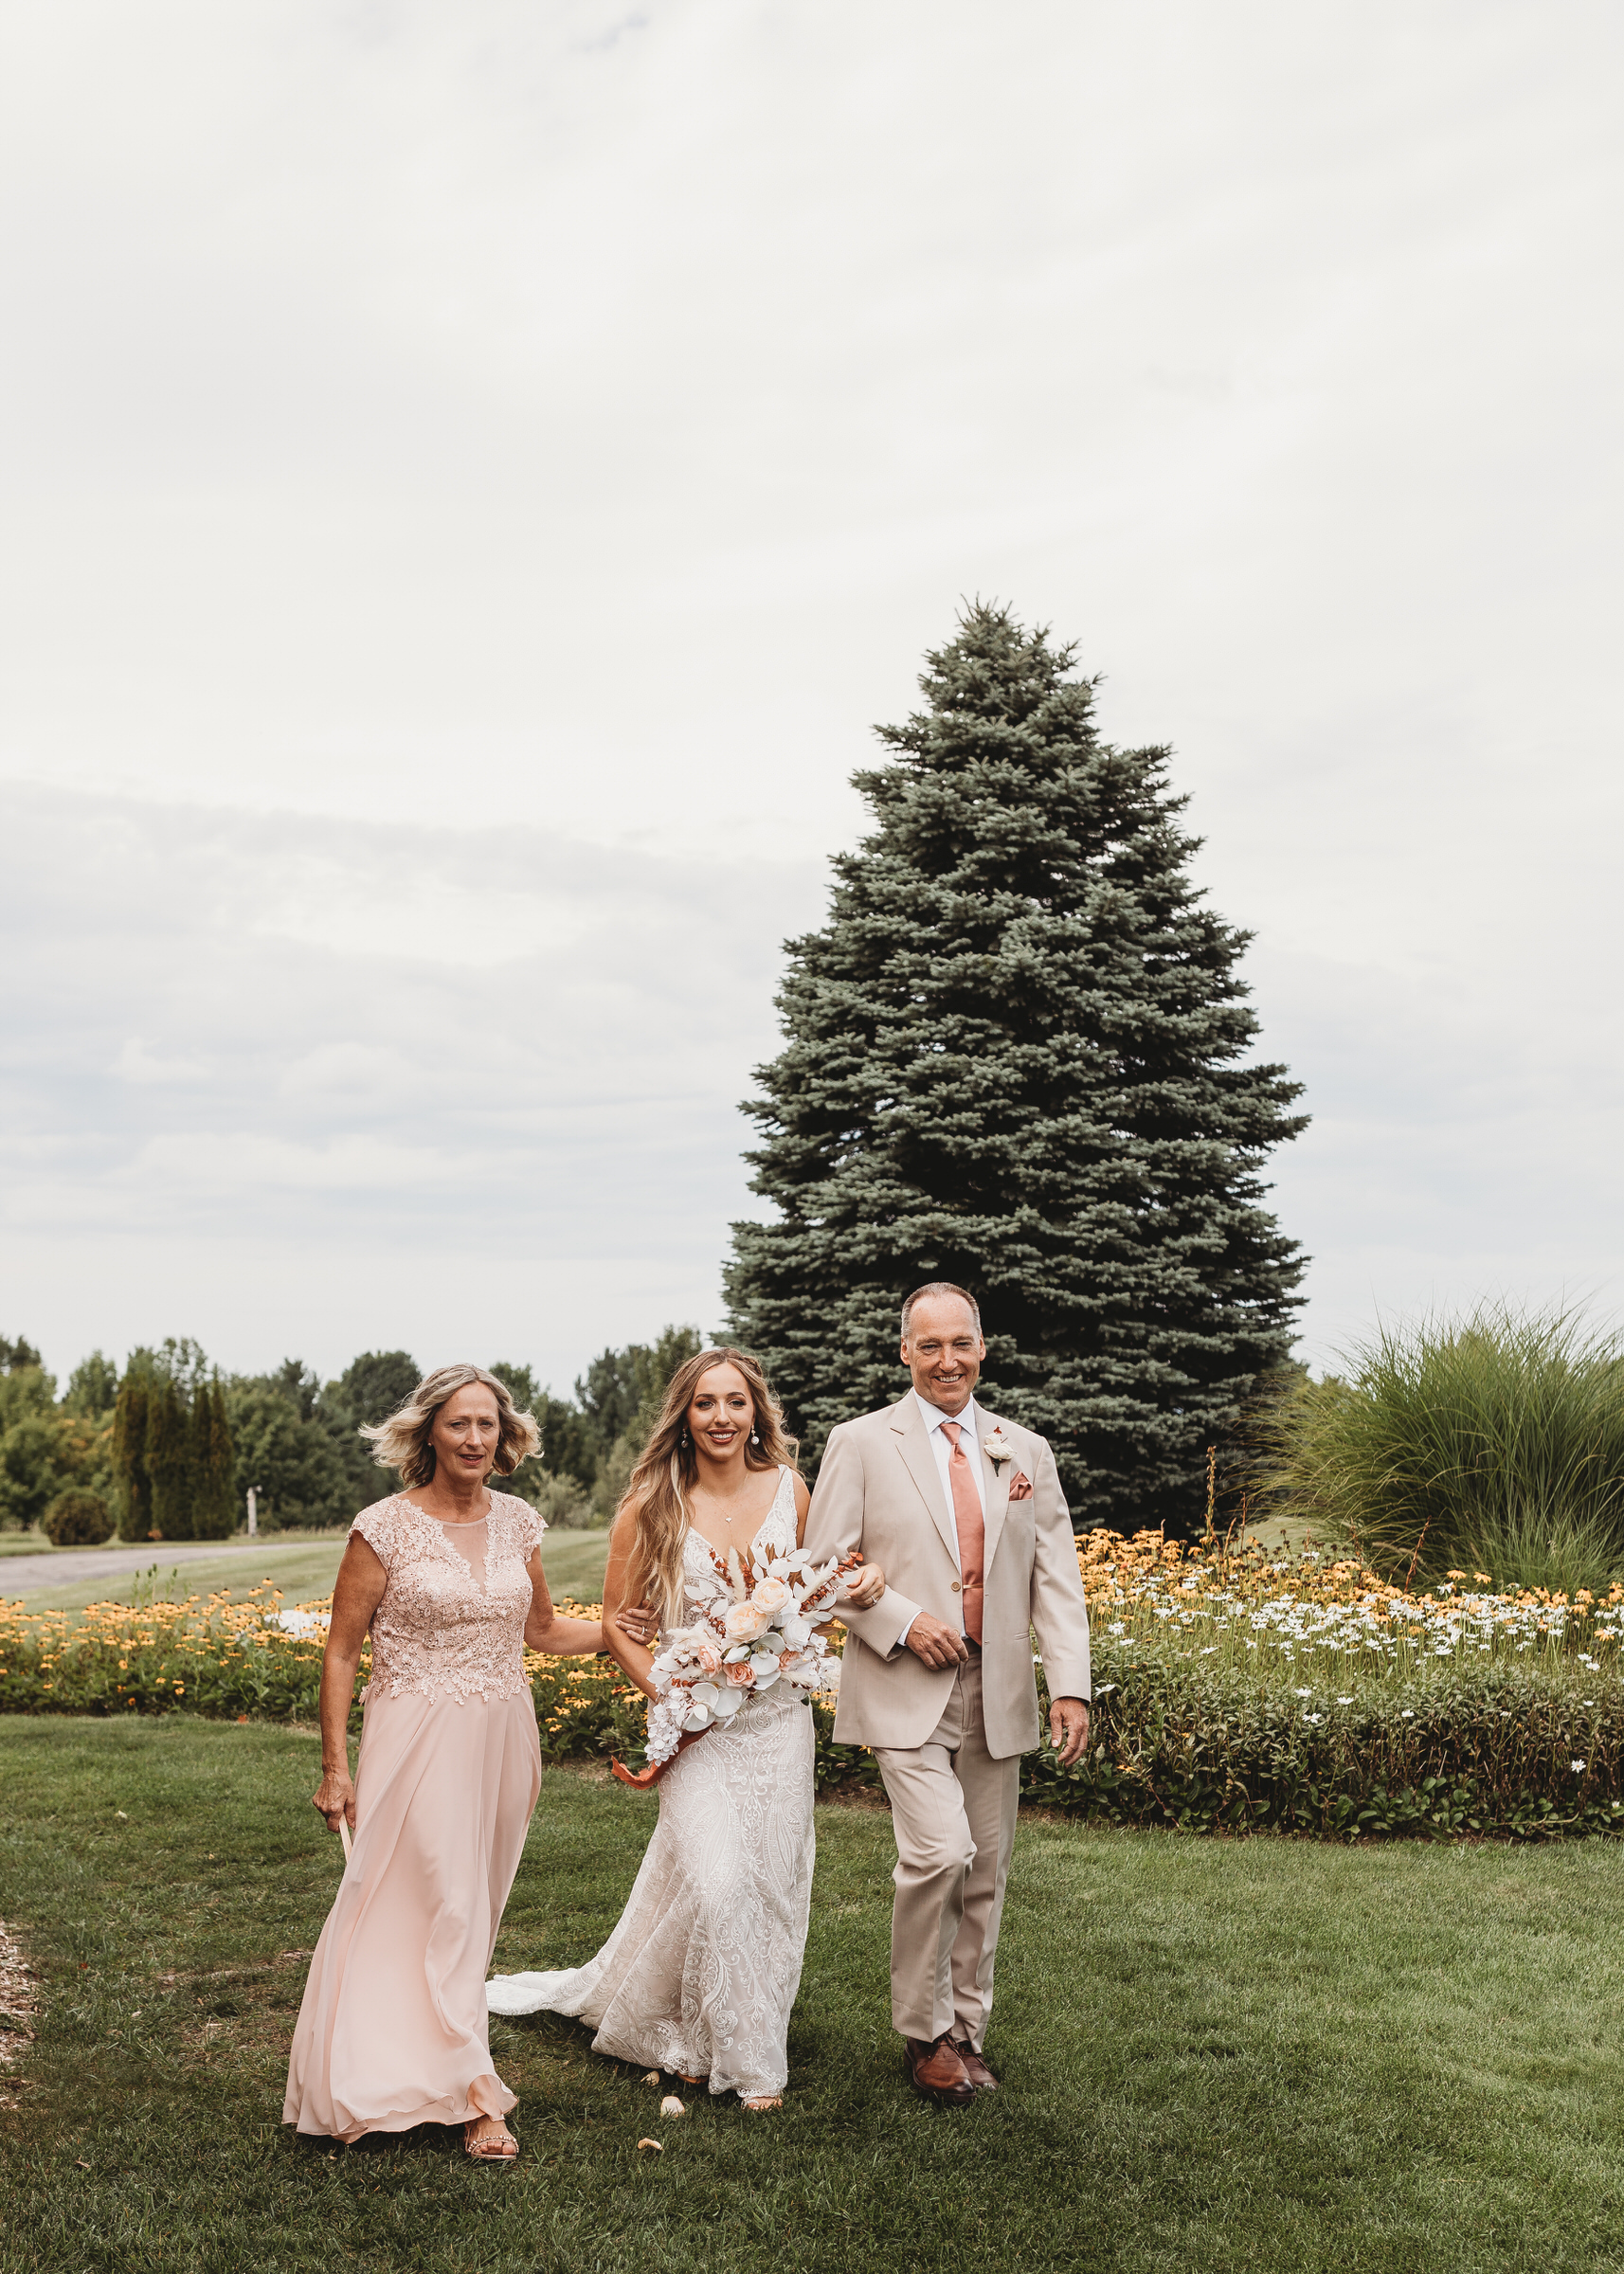 Lindsay Elaine Photography - Michigan Wedding Photographer - Timberlee Hills, Traverse City, Michigan